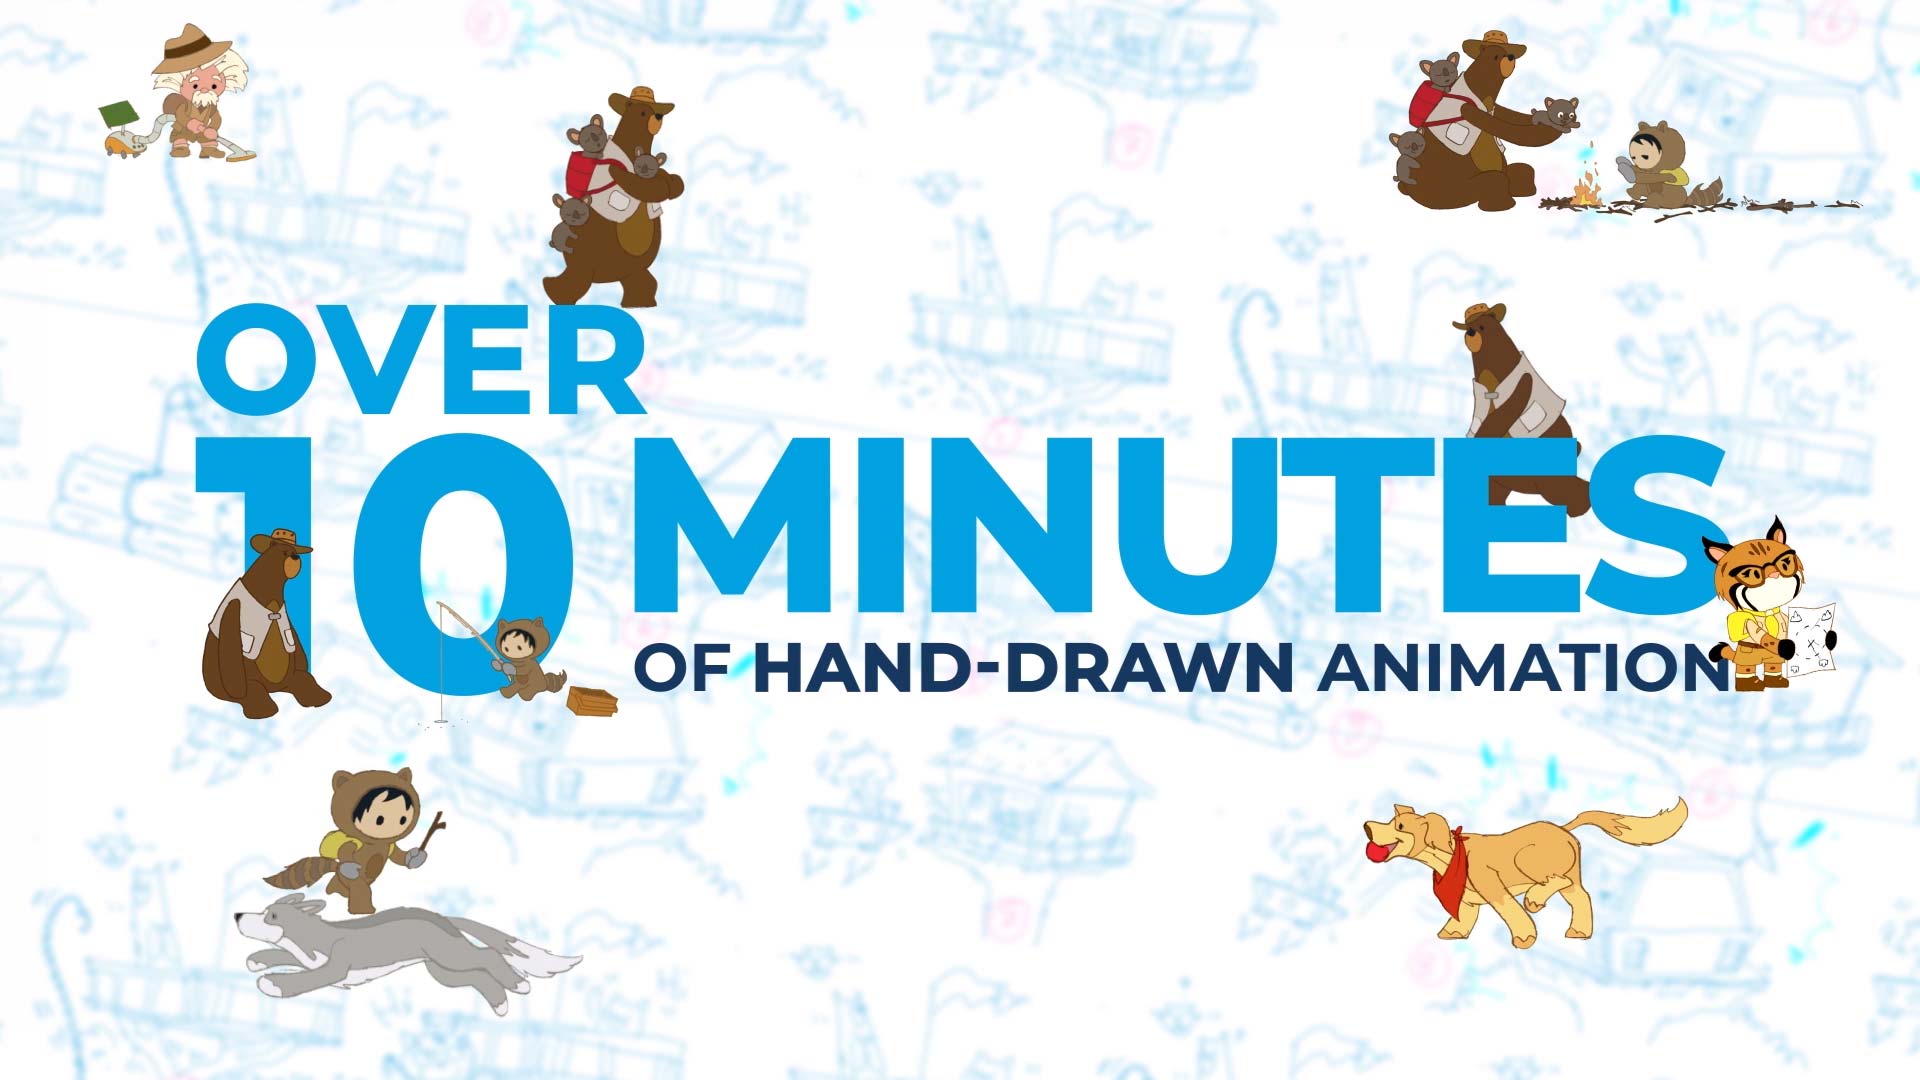 Hand drawn character animation studio